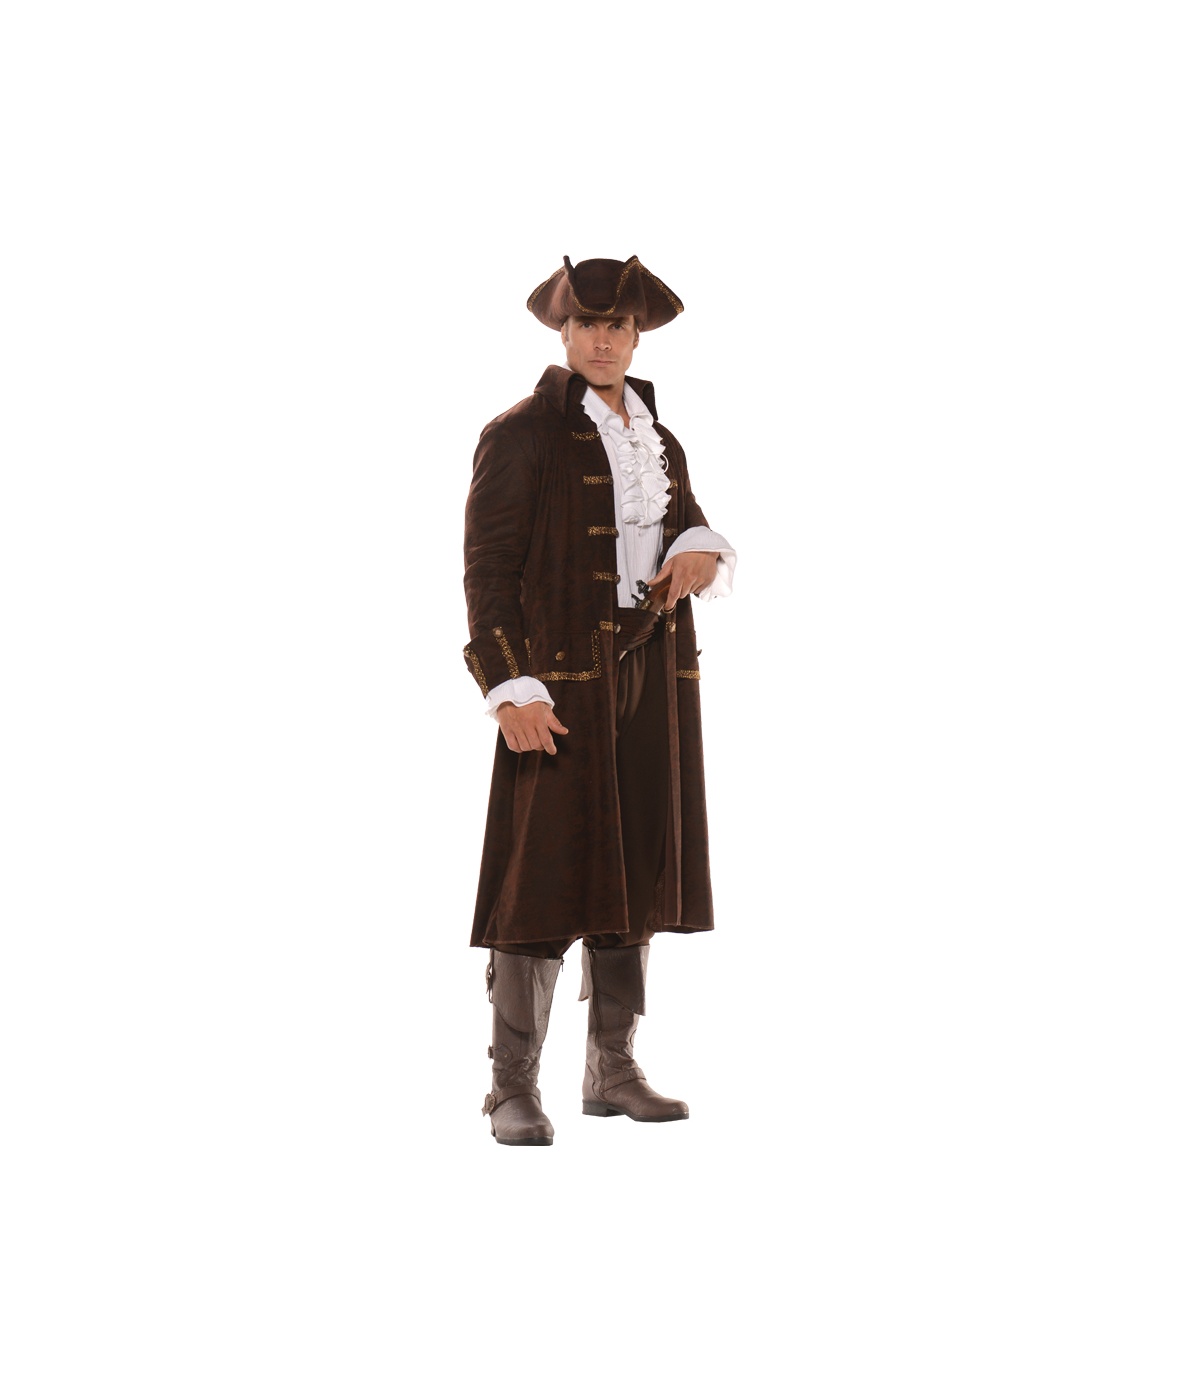  Captain Barrett Pirate Costume